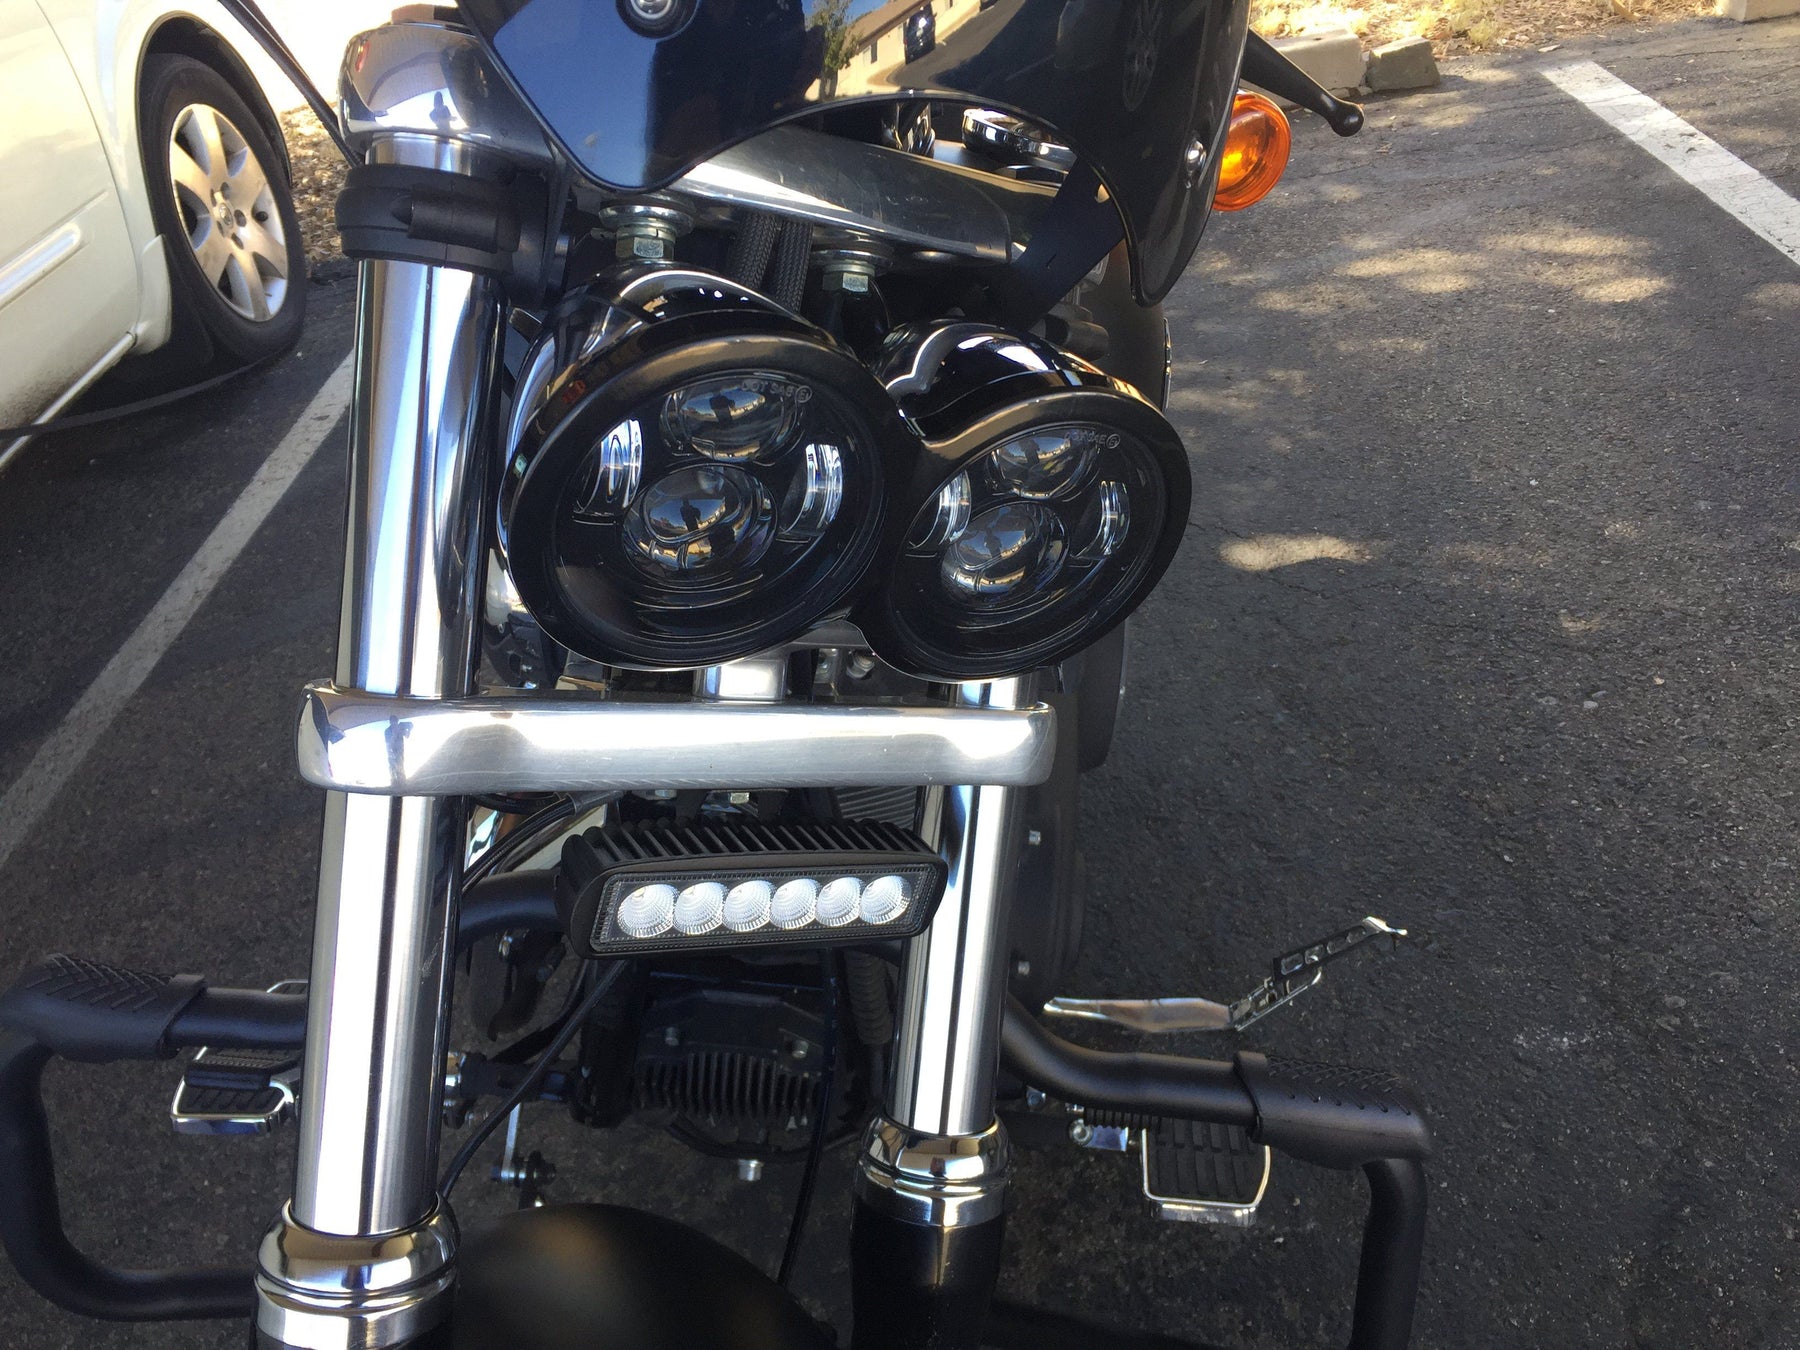 Motorcycle 6led bar headlight motor light motor led